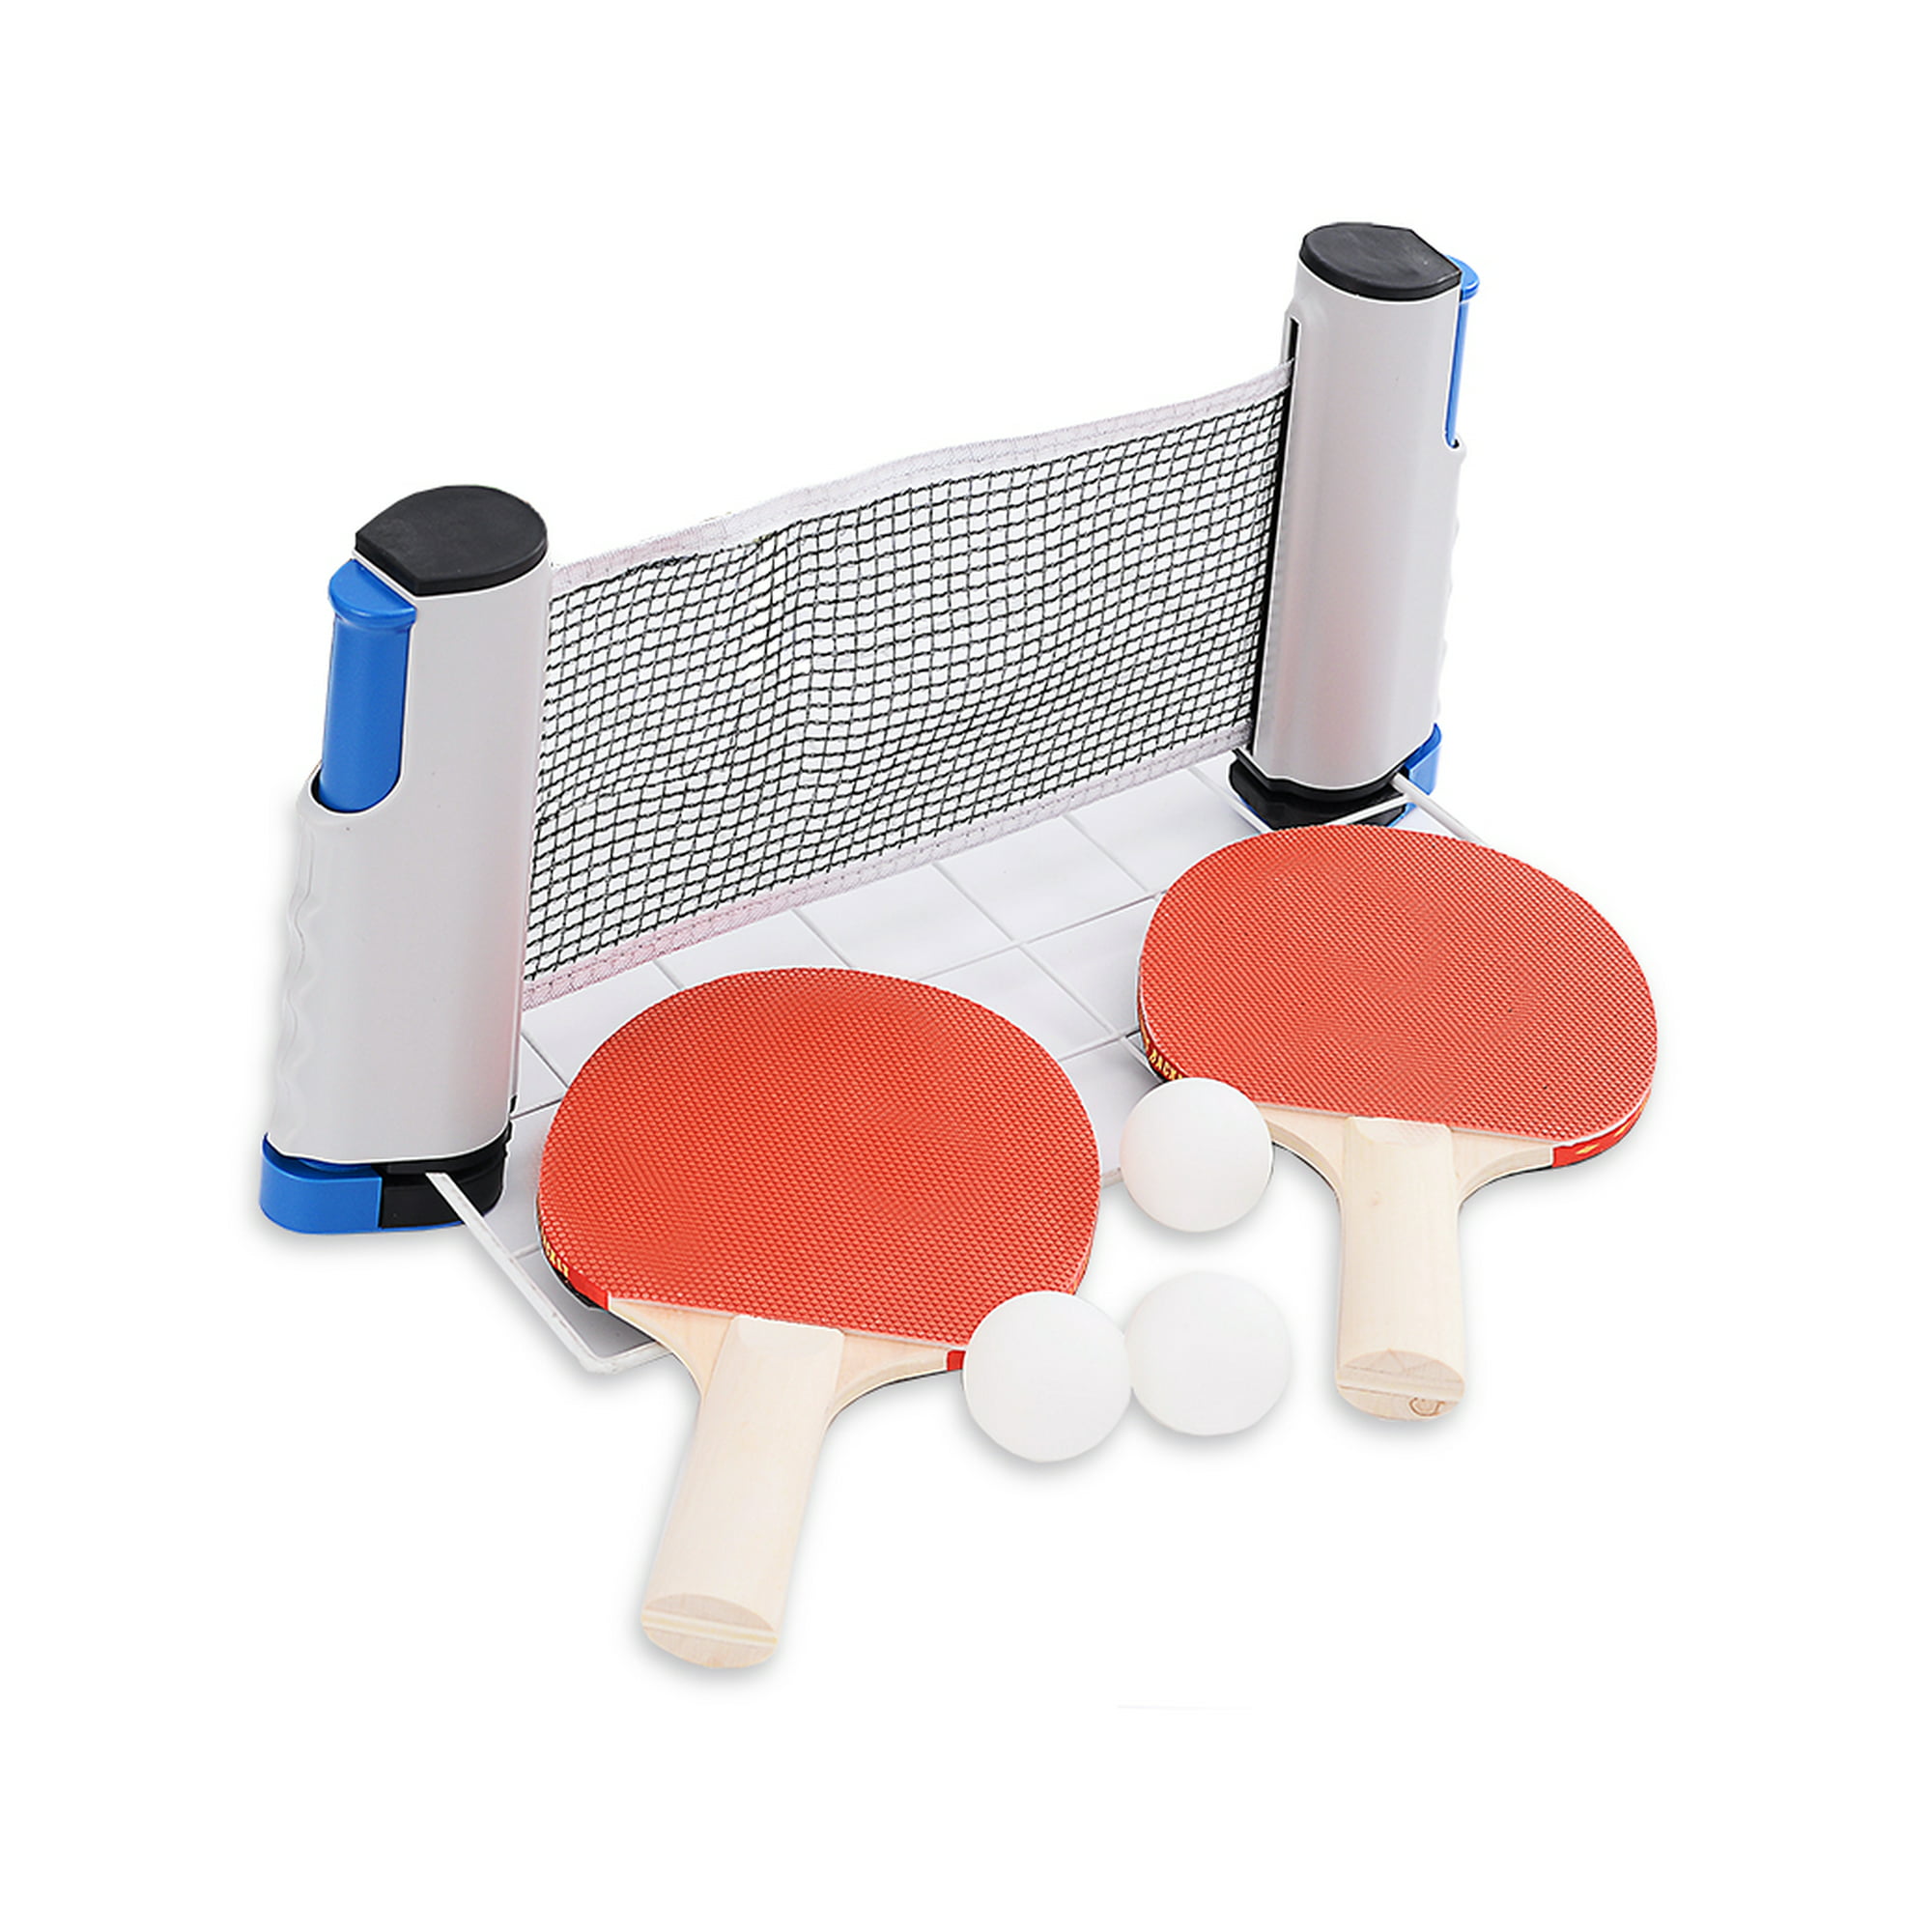 Set de Ping Pong con Red Retráctil Match & Enjoy Set de Ping Pong con red  retráctil y soportes ajustables, color azul y gris